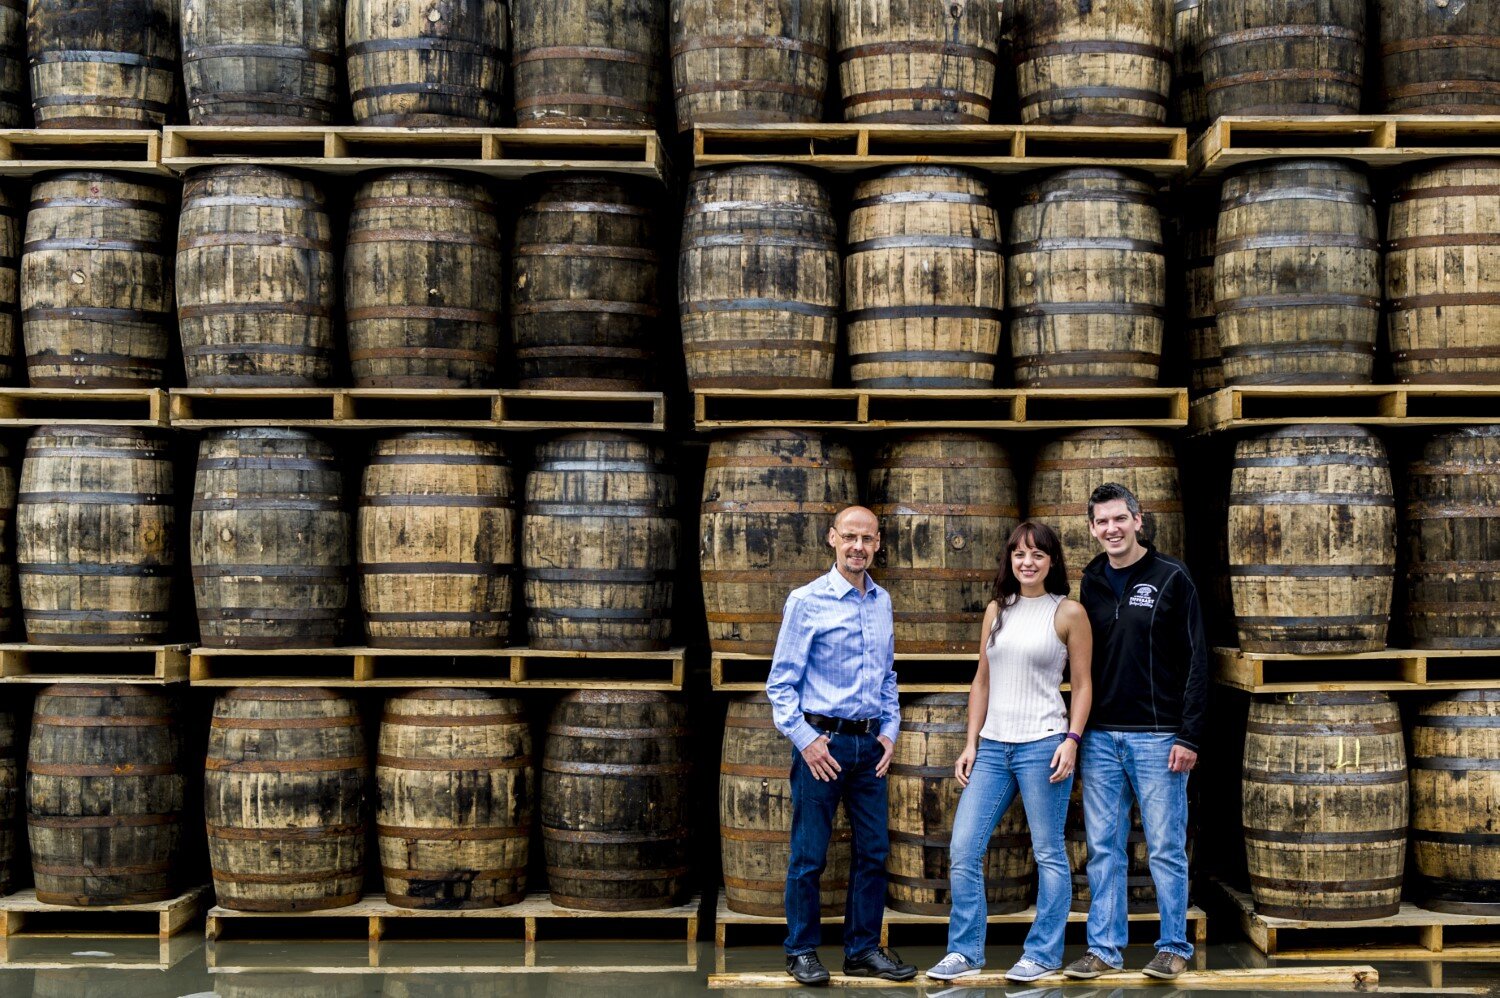 enotecabacco-web-photo-tipperary-distillery-irish-whisky-7.jpg